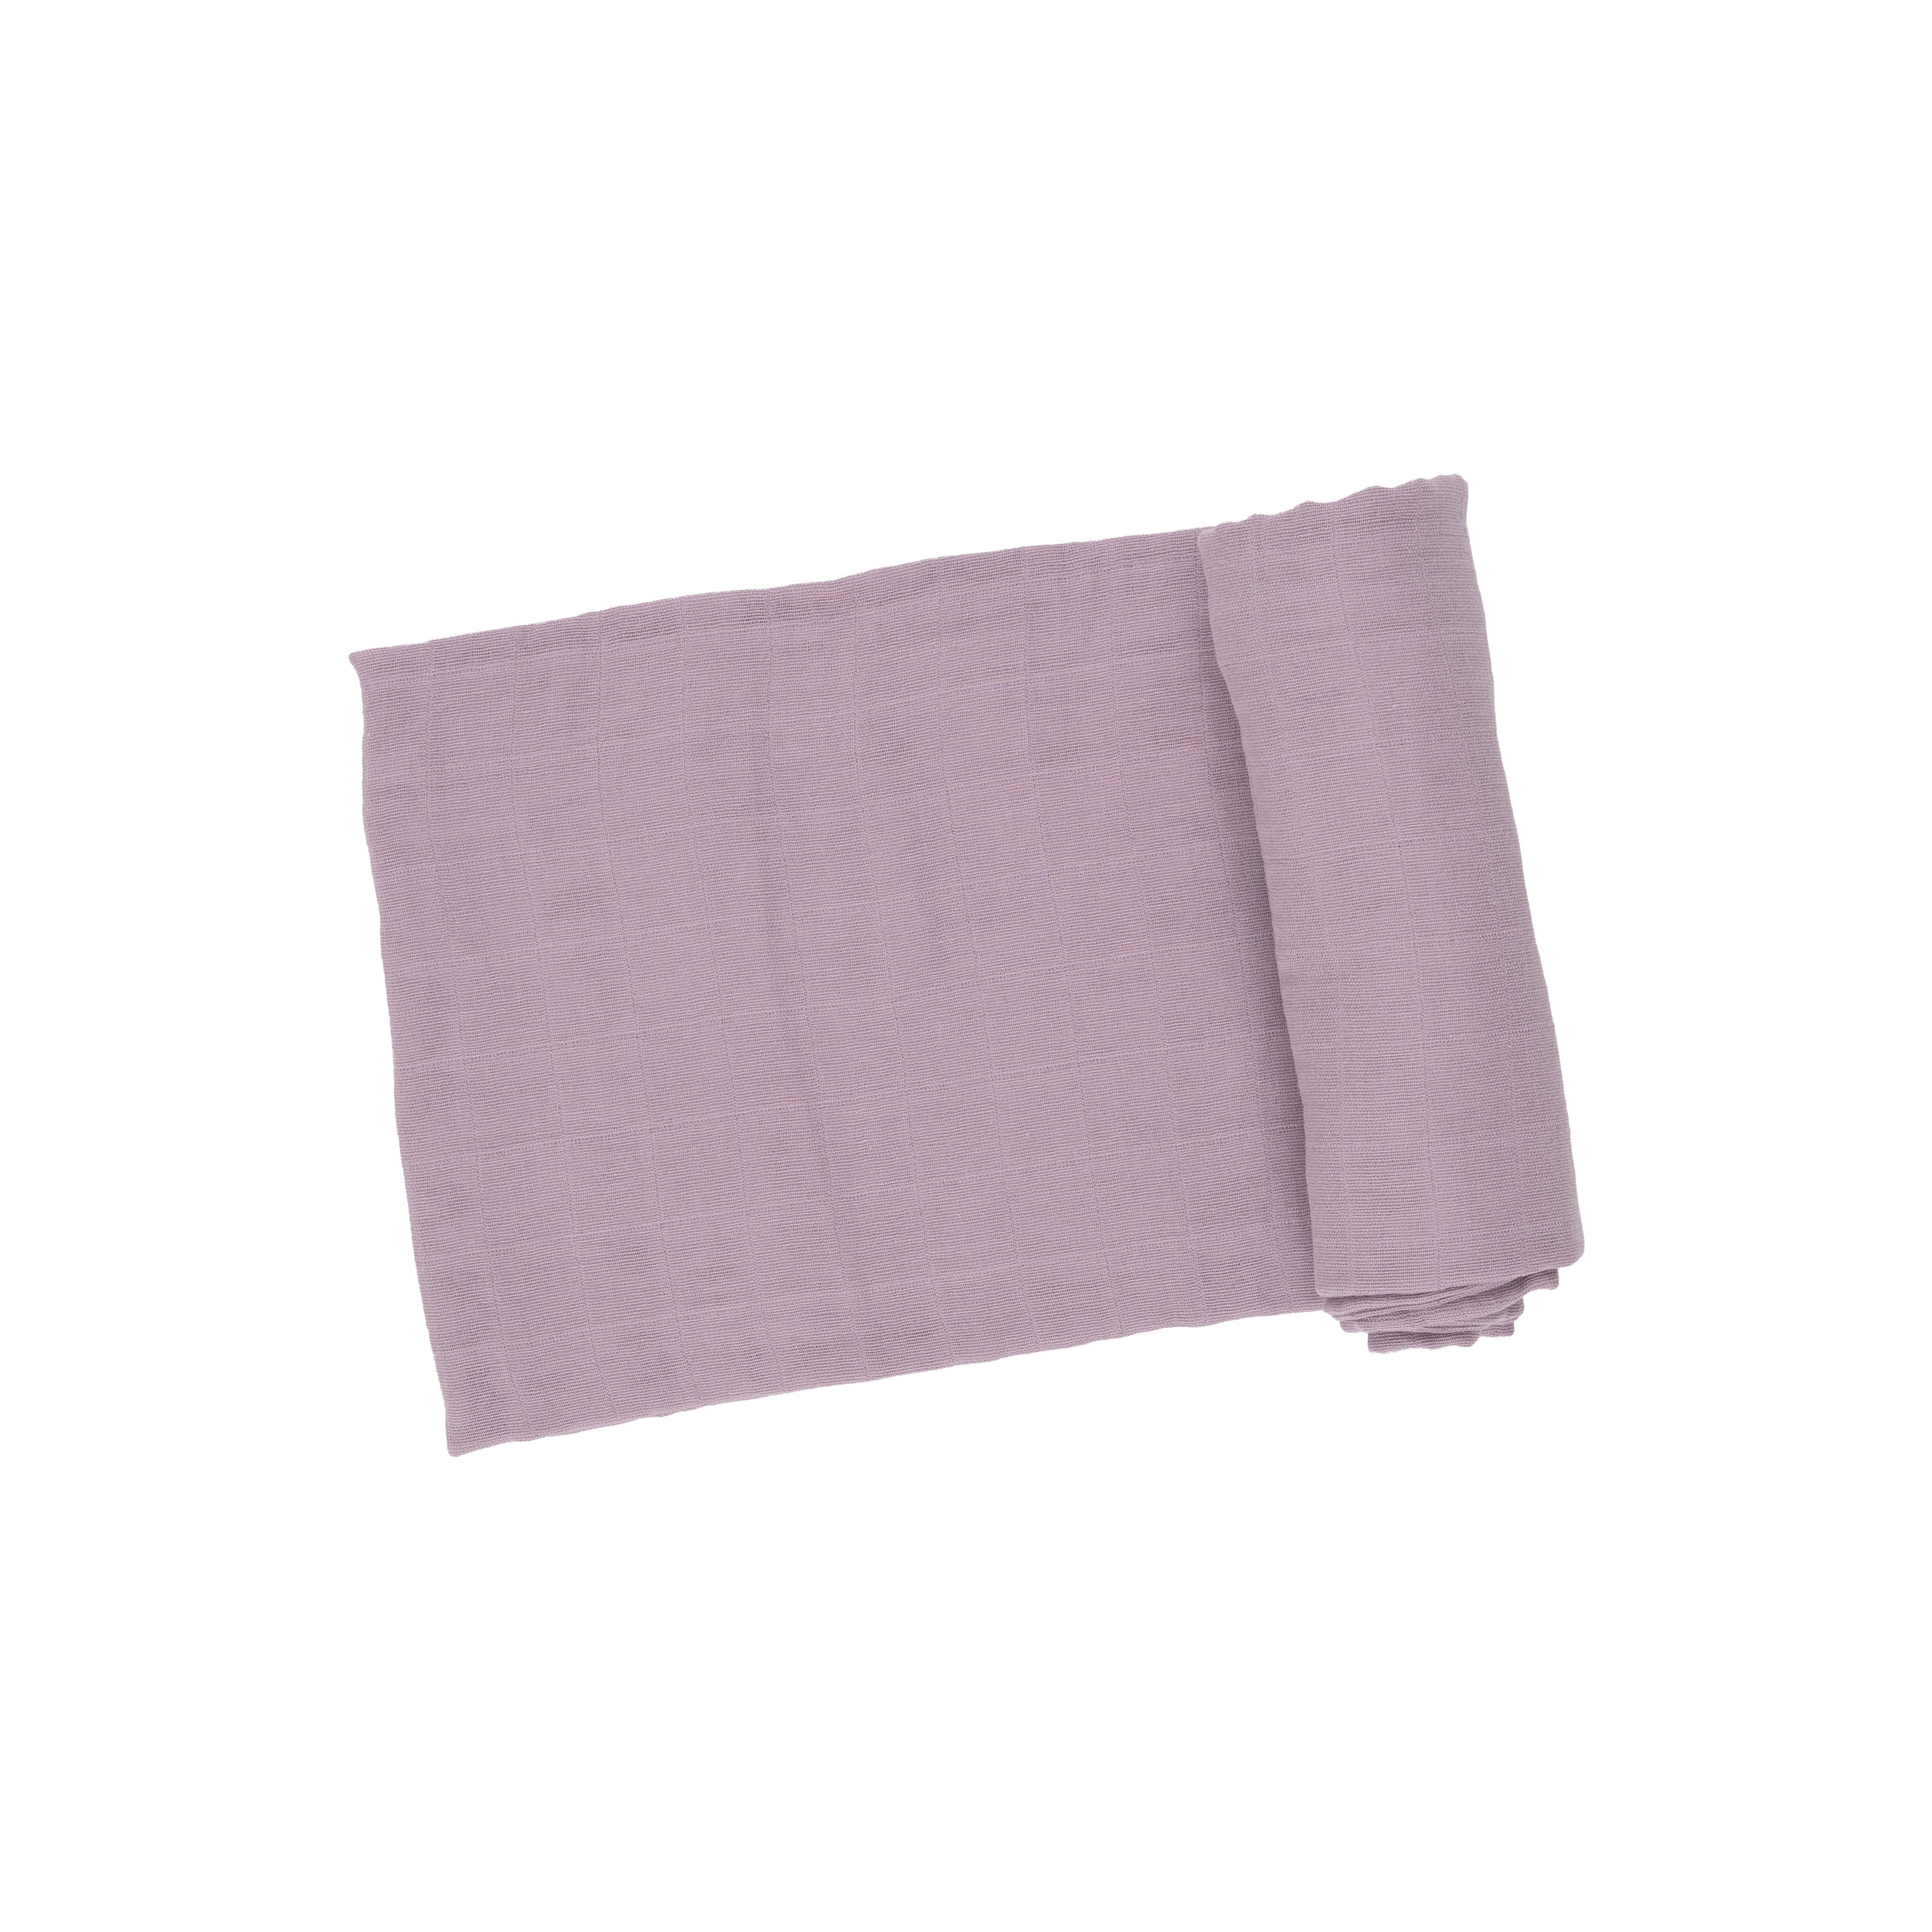 Swaddle Blanket - Dusty Lavender Solid Muslin